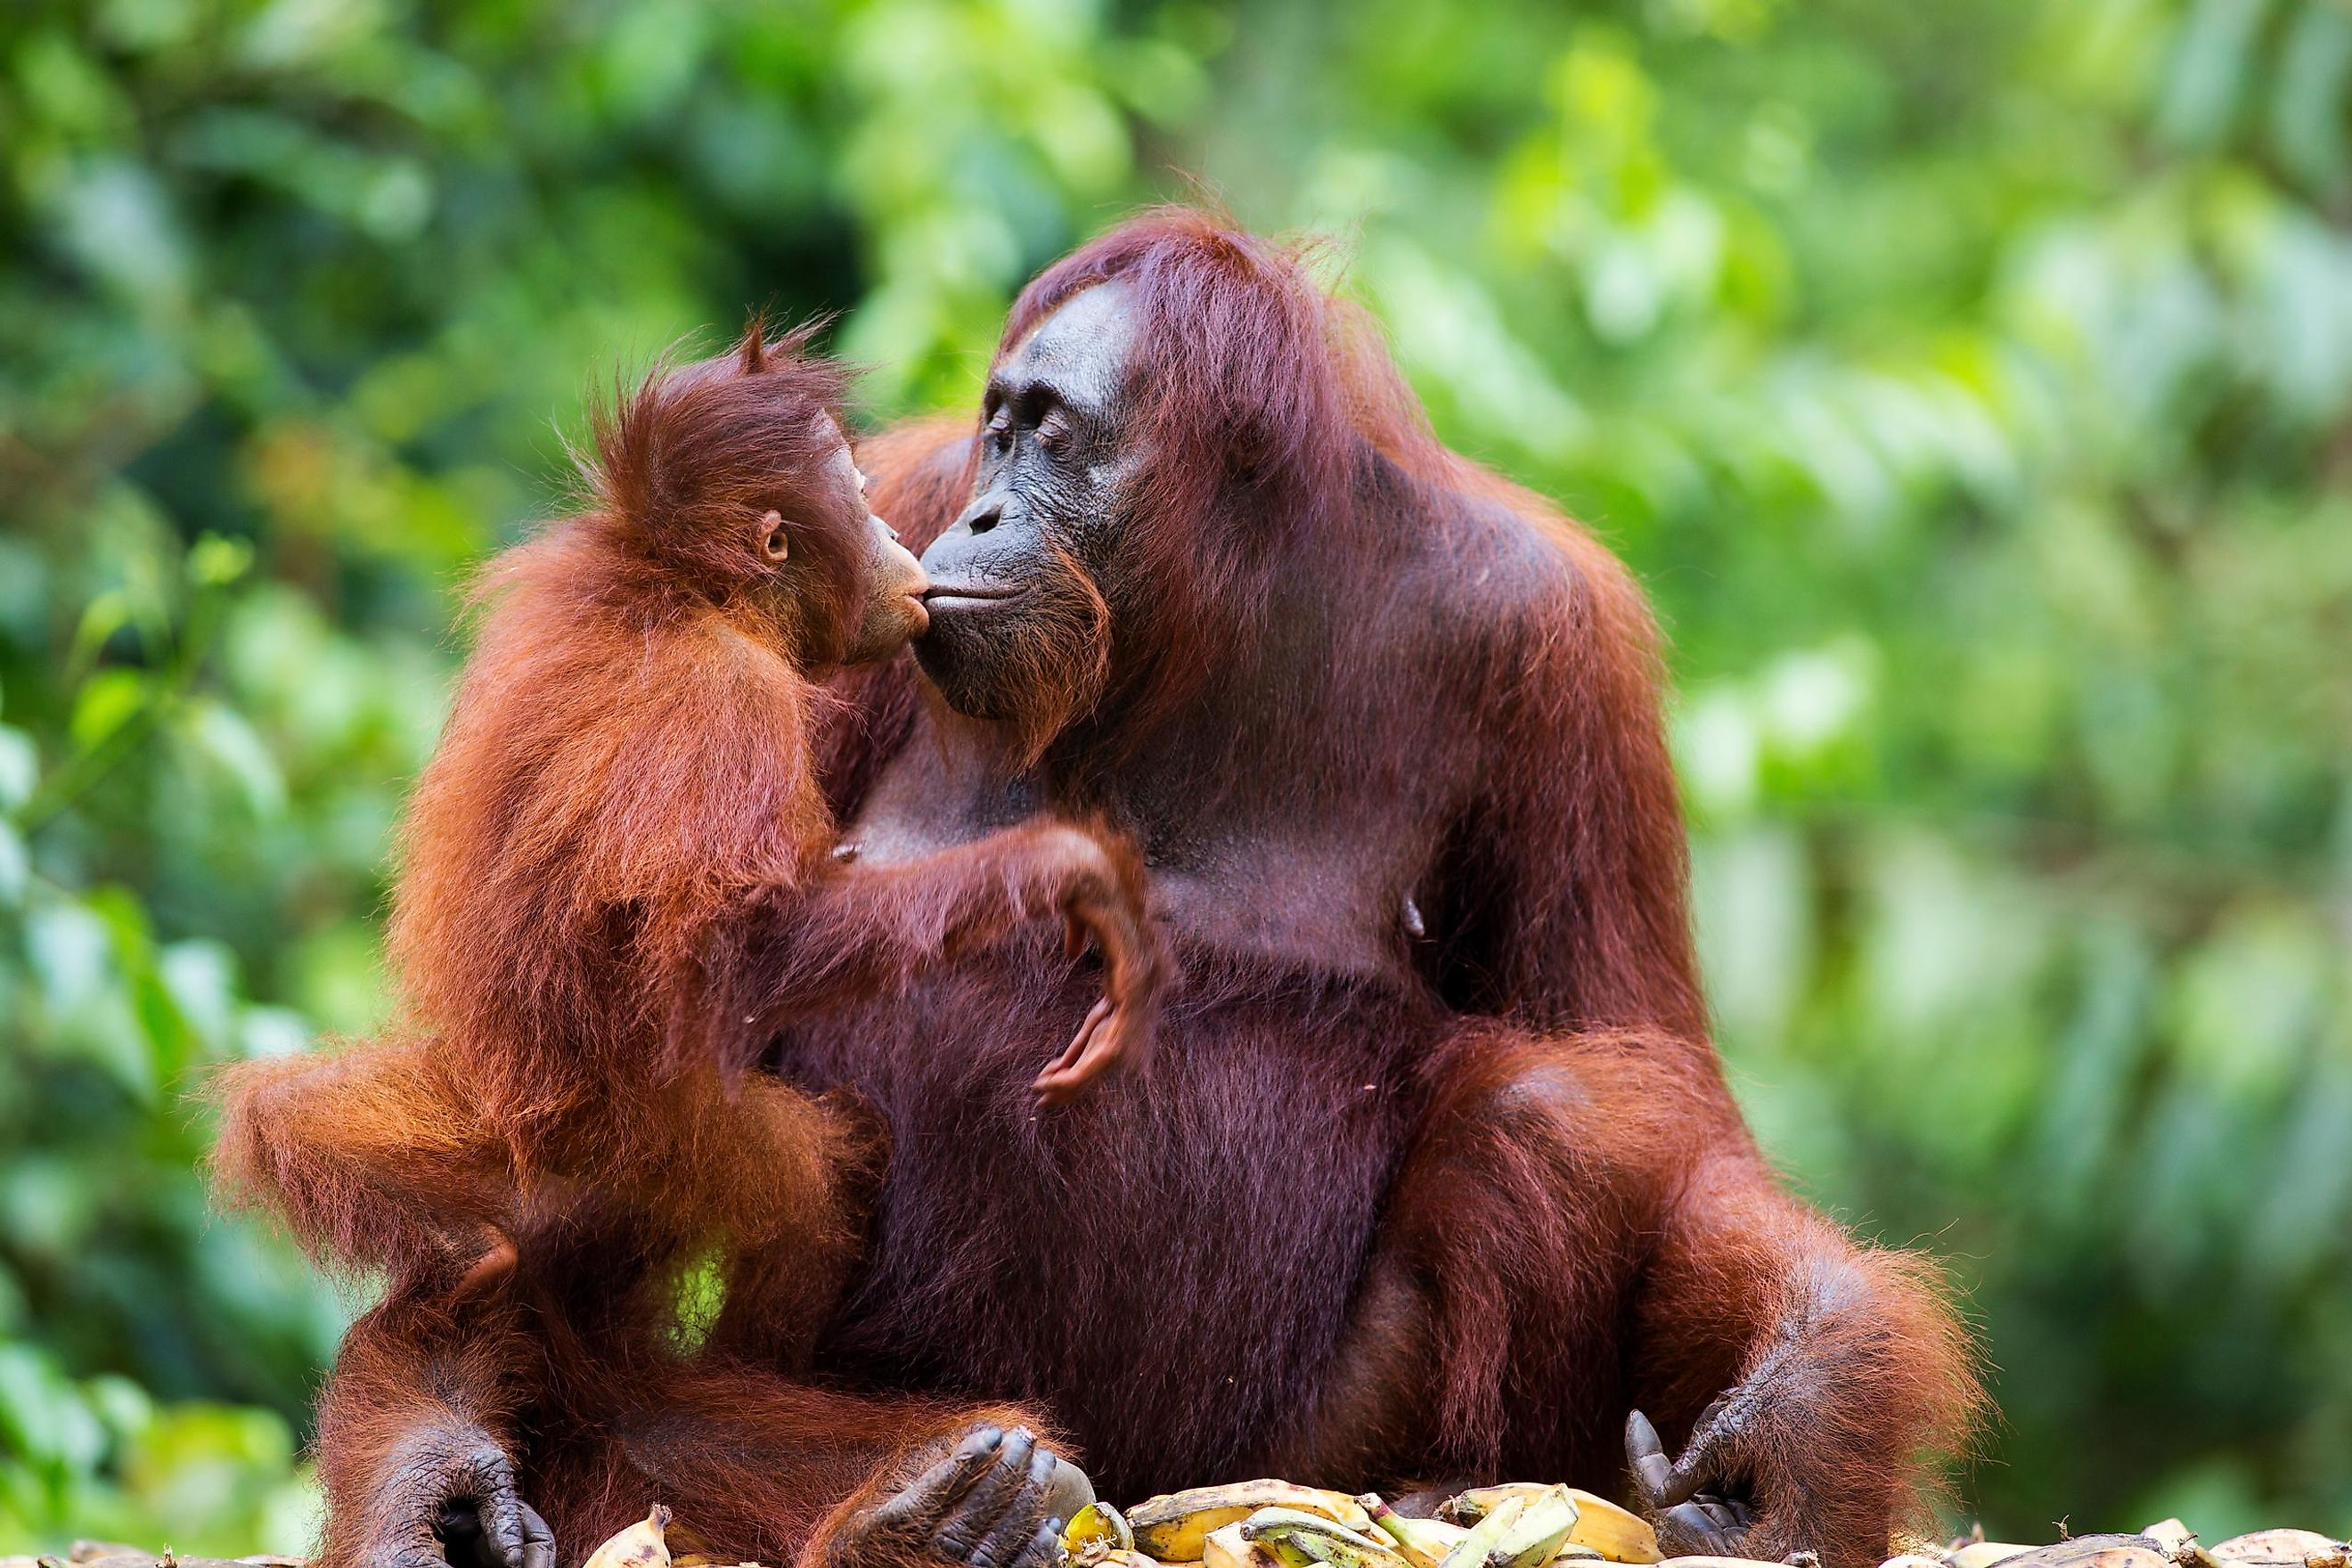 Mother and baby orangutan in their native habitat. Rainforest of Borneo.